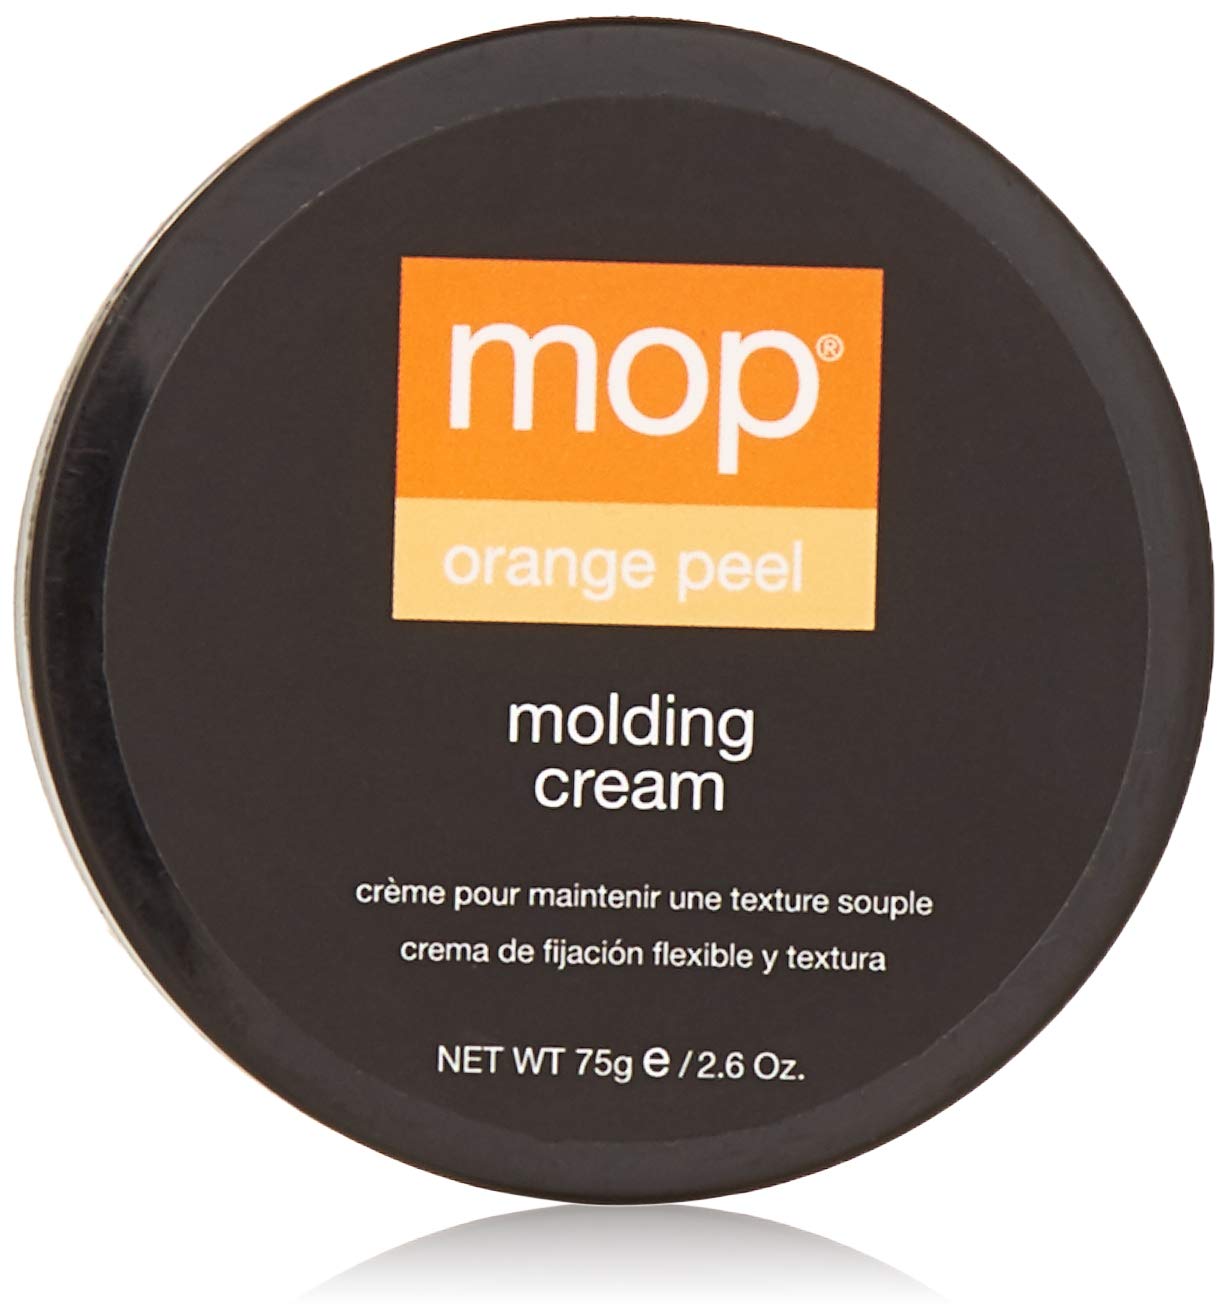 MOP Orange Peel Molding Cream, 2.6 Oz., Adds Texture & Depth with a Medium, Matte Finish